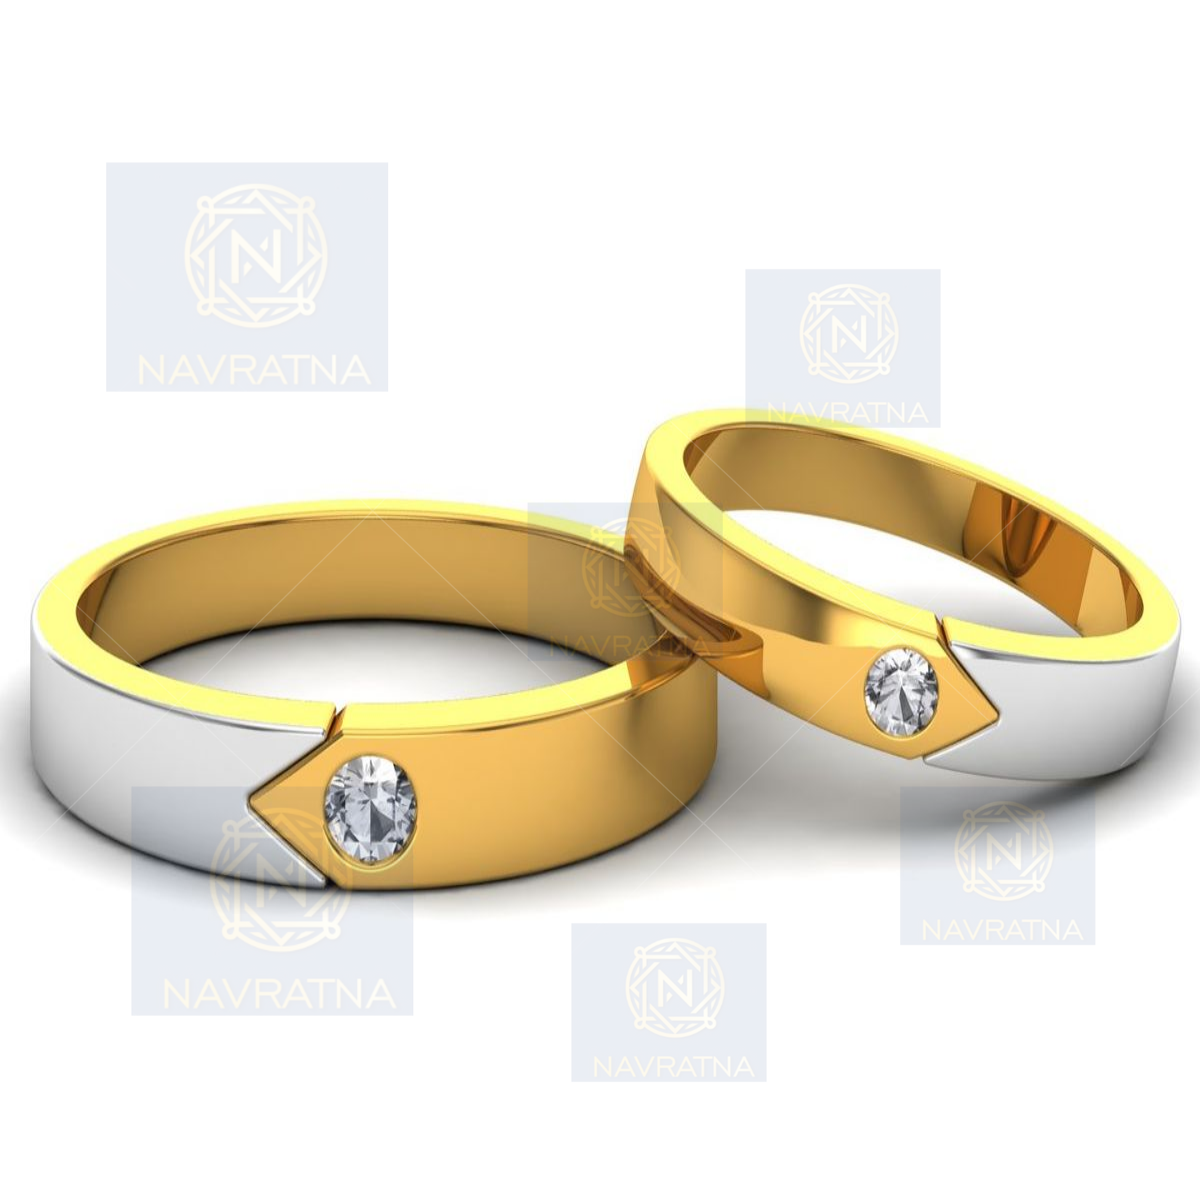 22K Gold Engagement, Wedding, Anniversary Gold Jewelry Man Women Couple Ring  5 | eBay